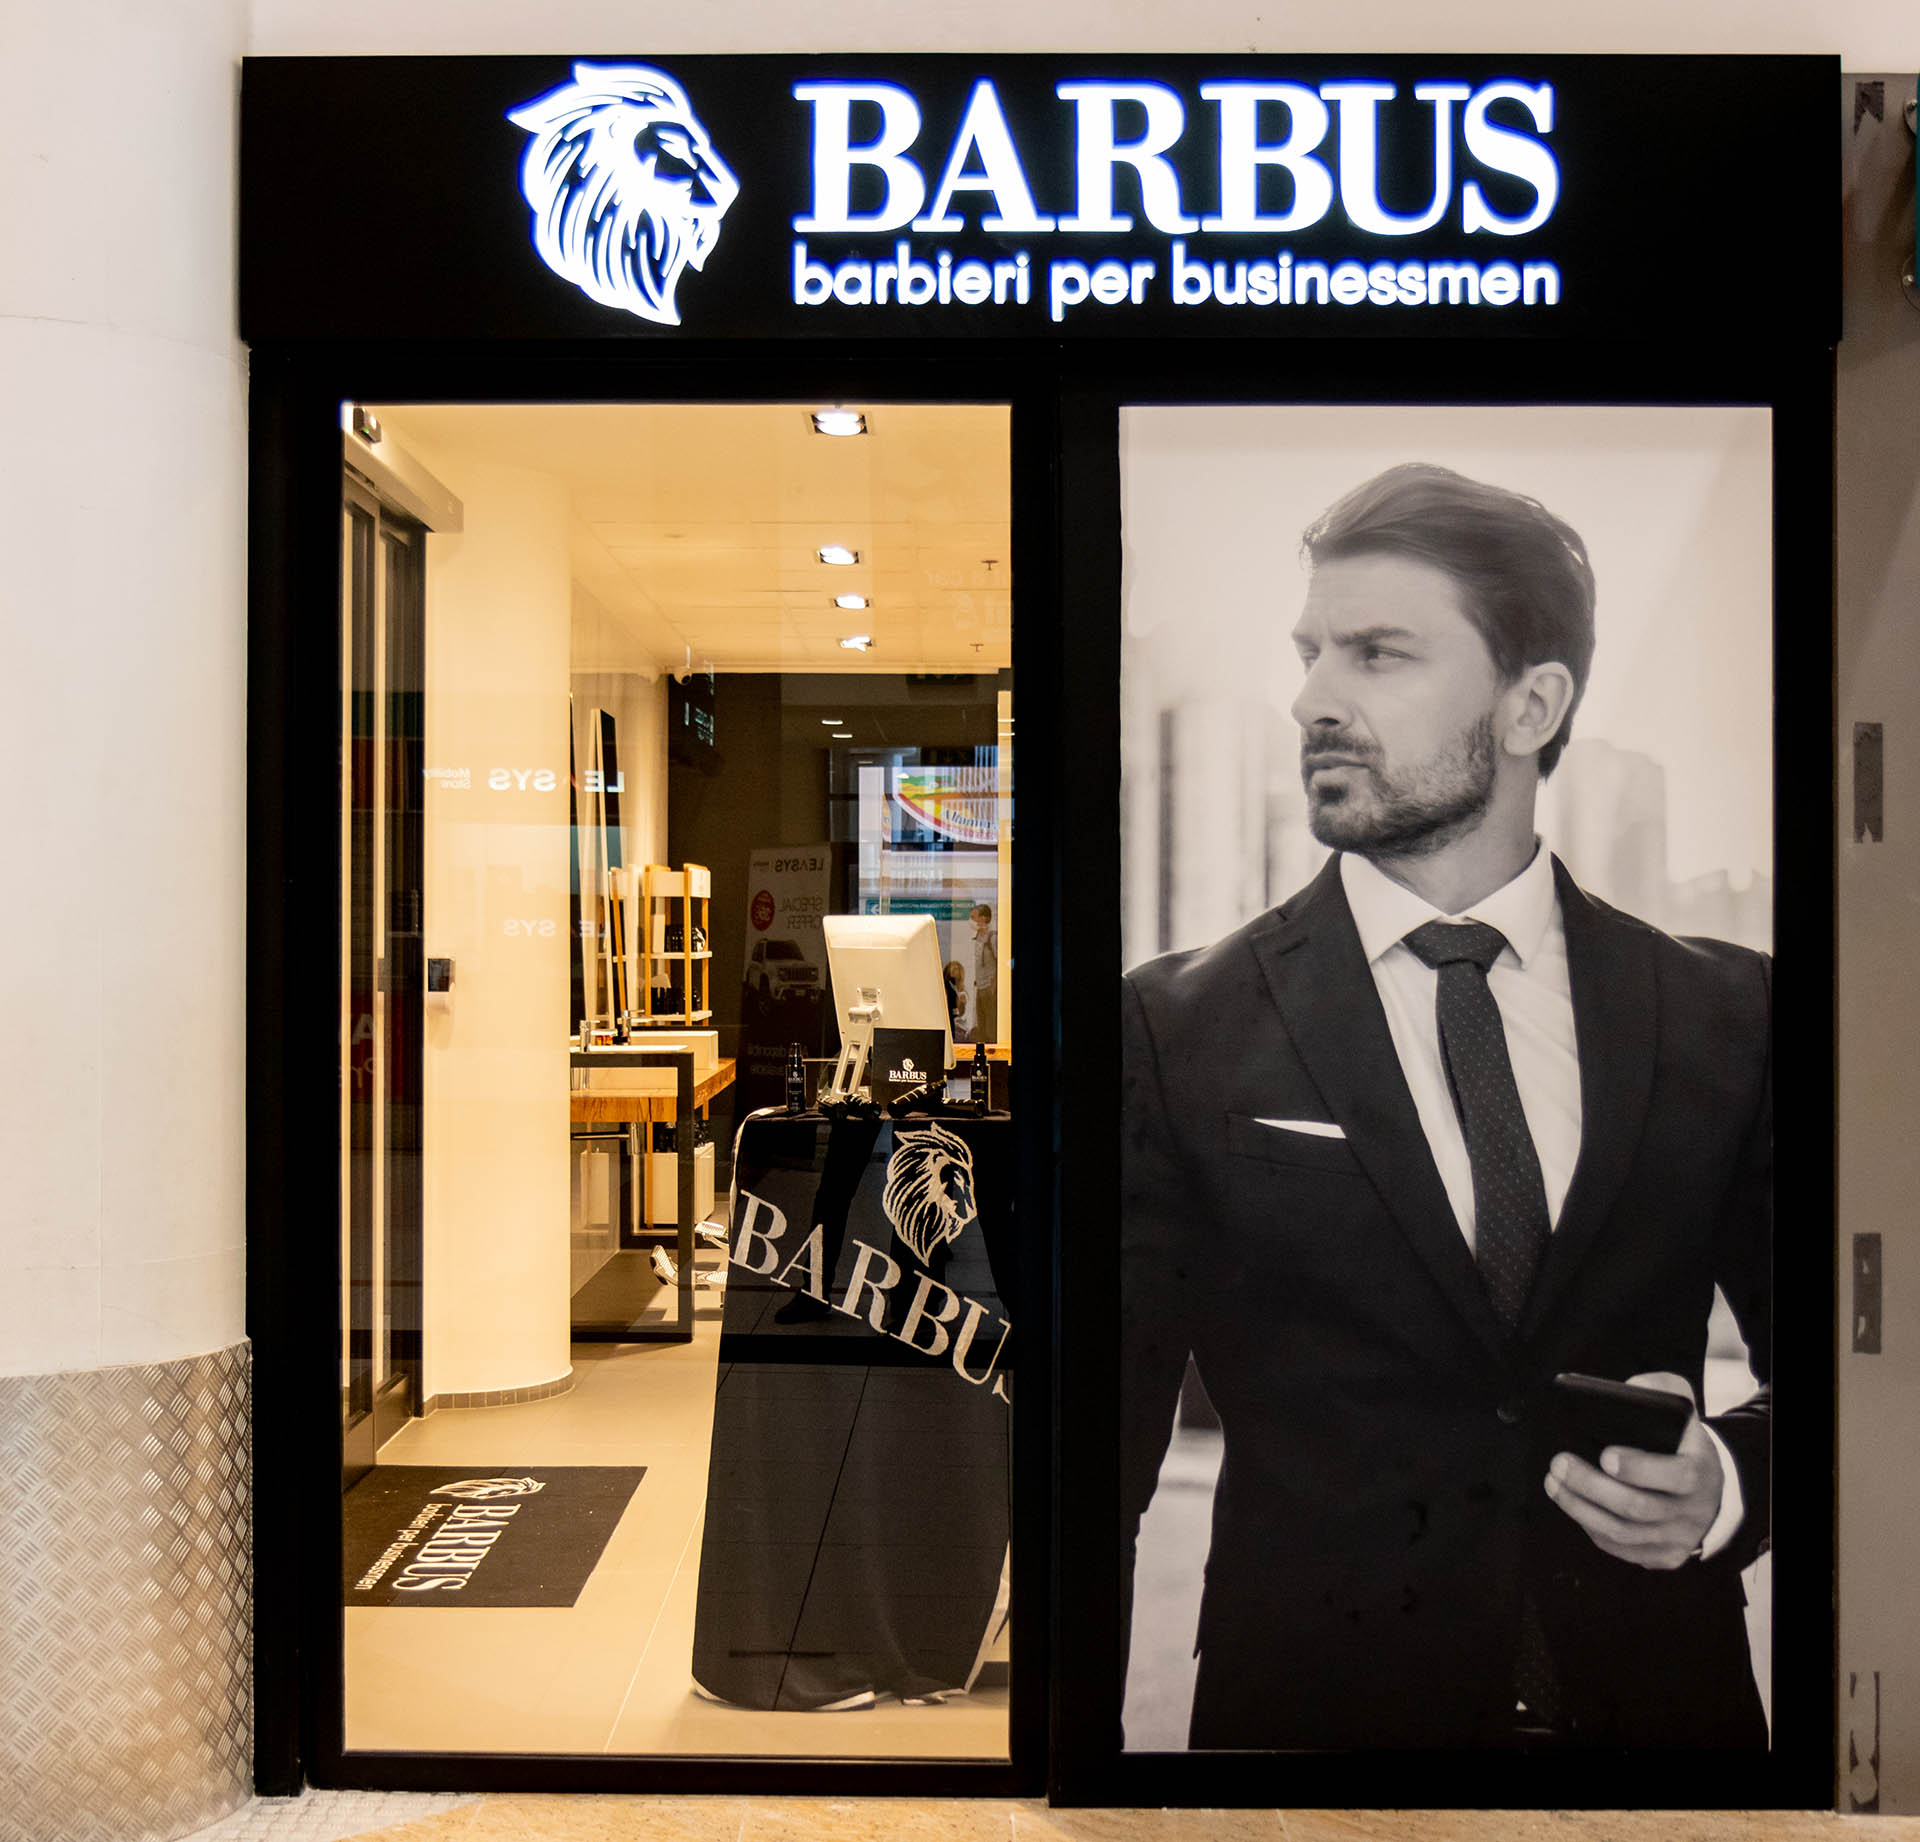 barbus - barberforbusinessman (8)